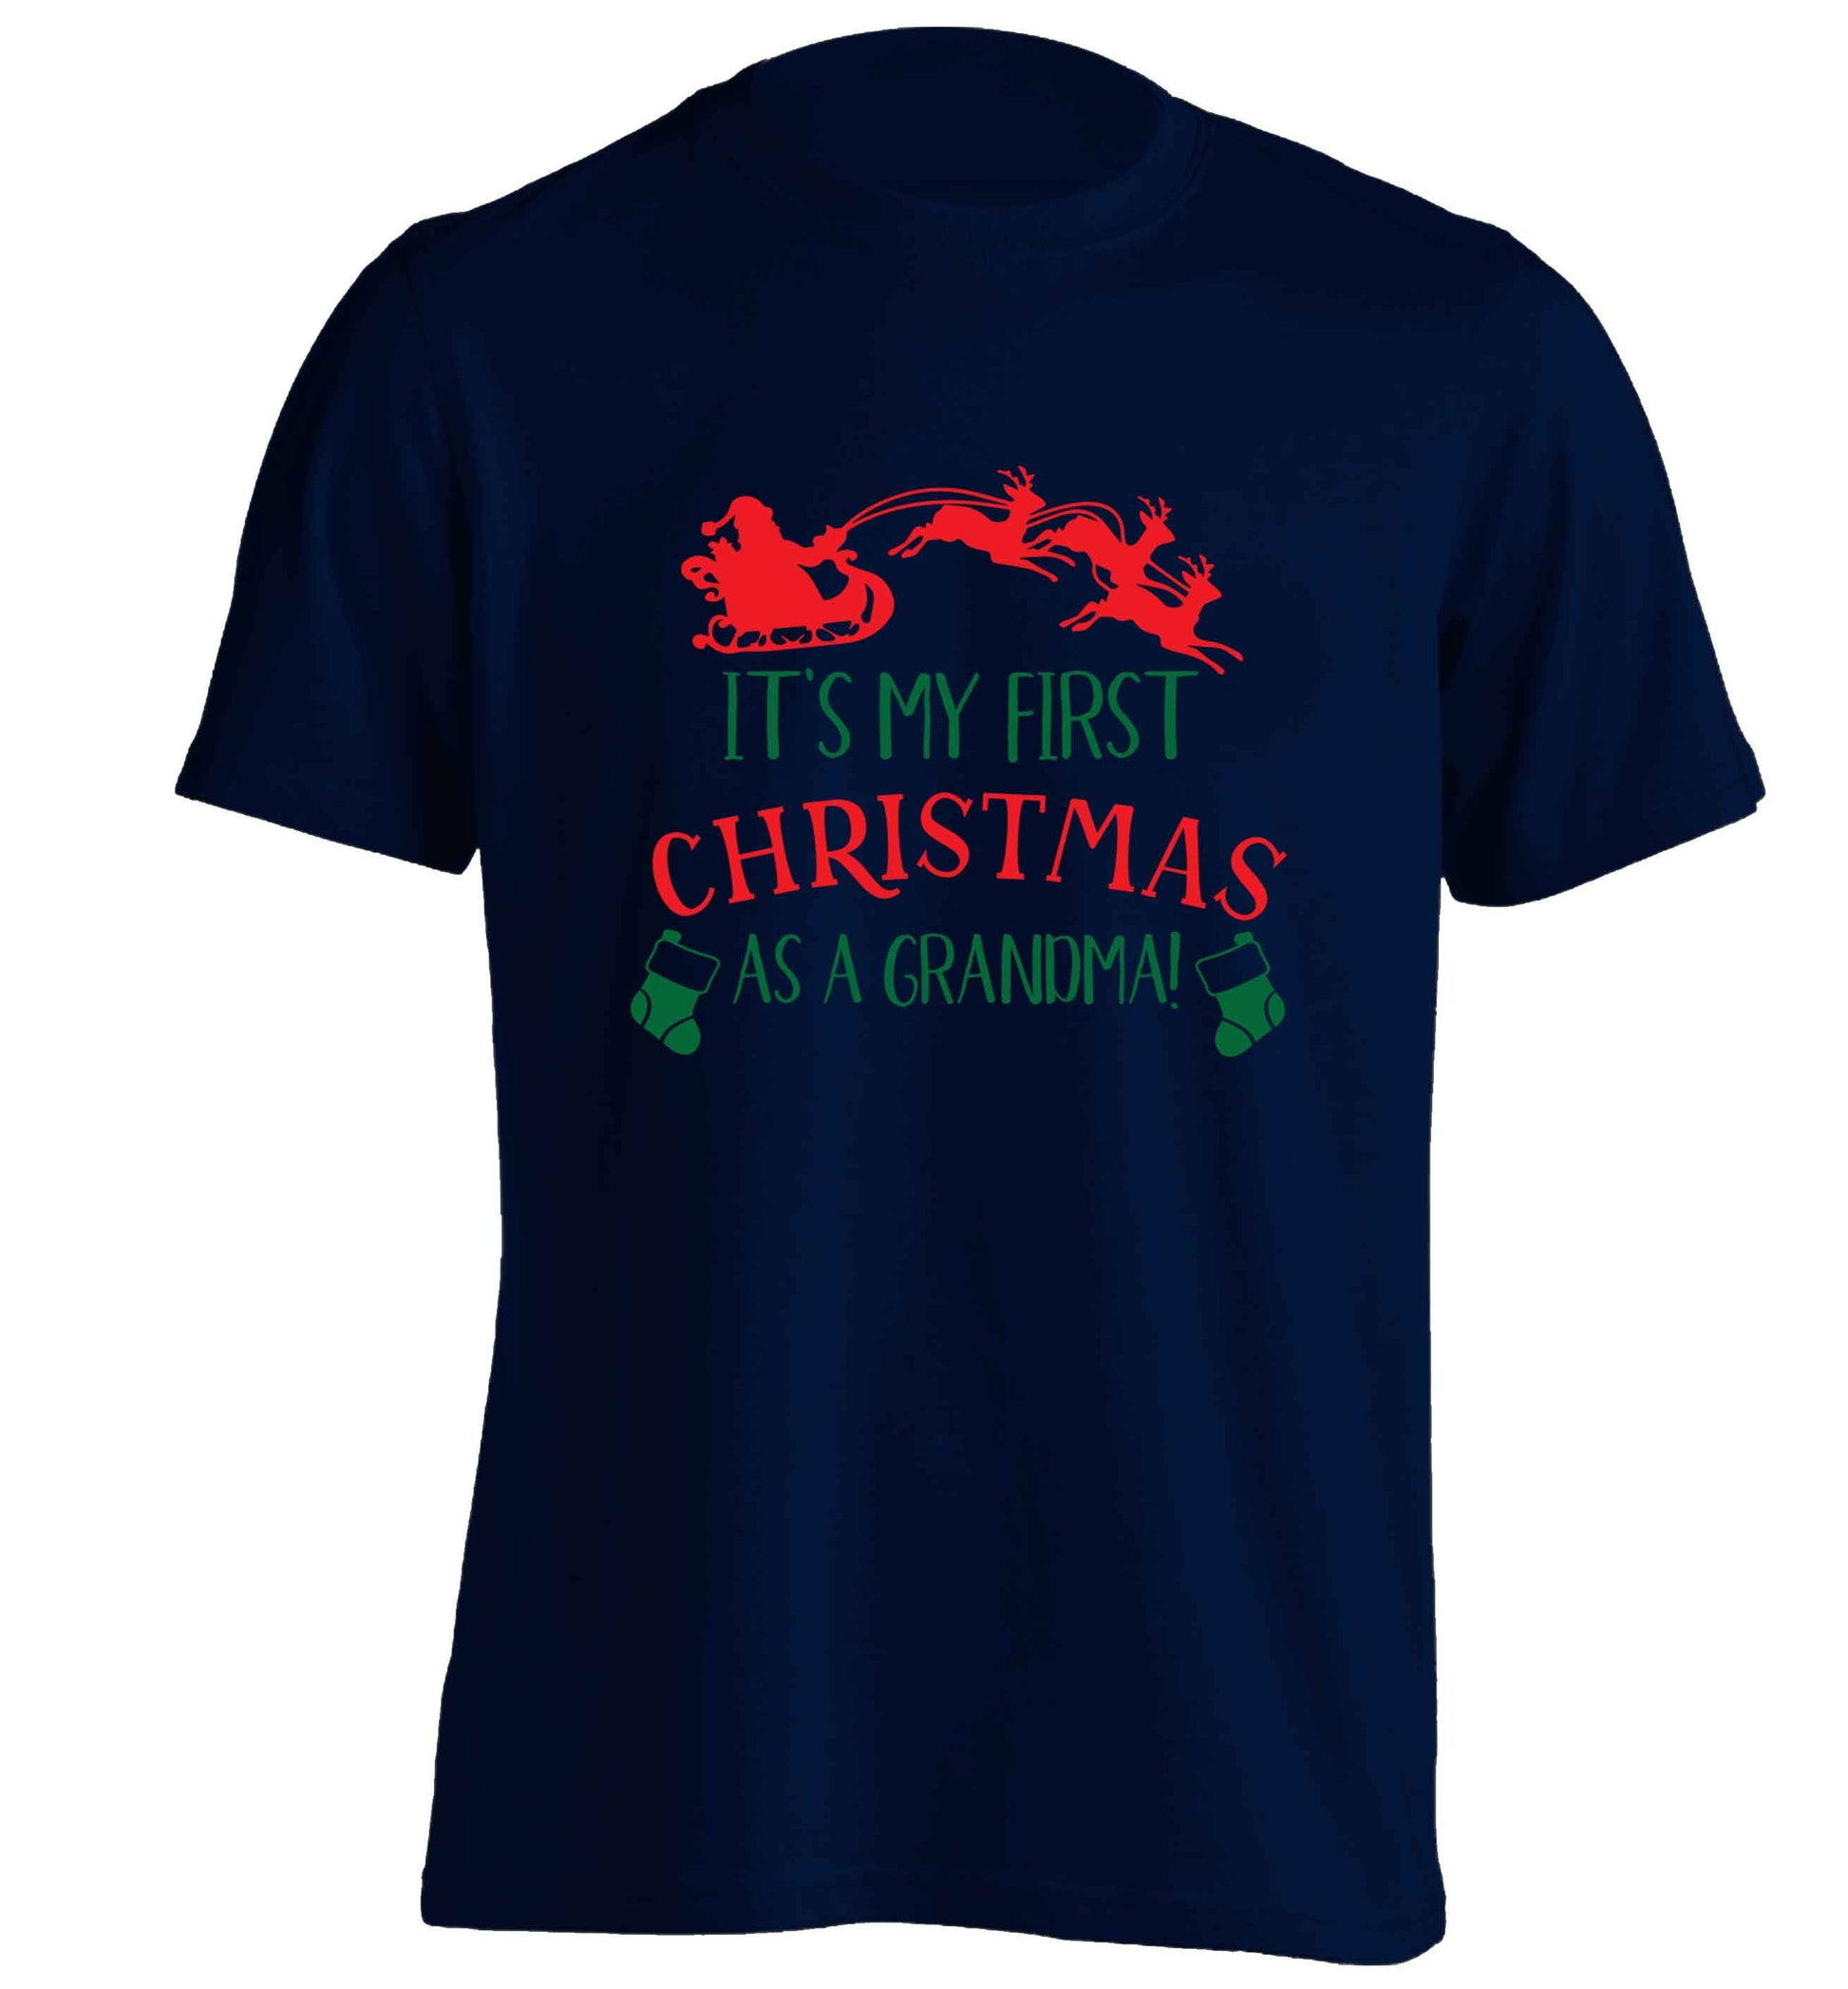 It's my first Christmas as a grandma! adults unisex navy Tshirt 2XL